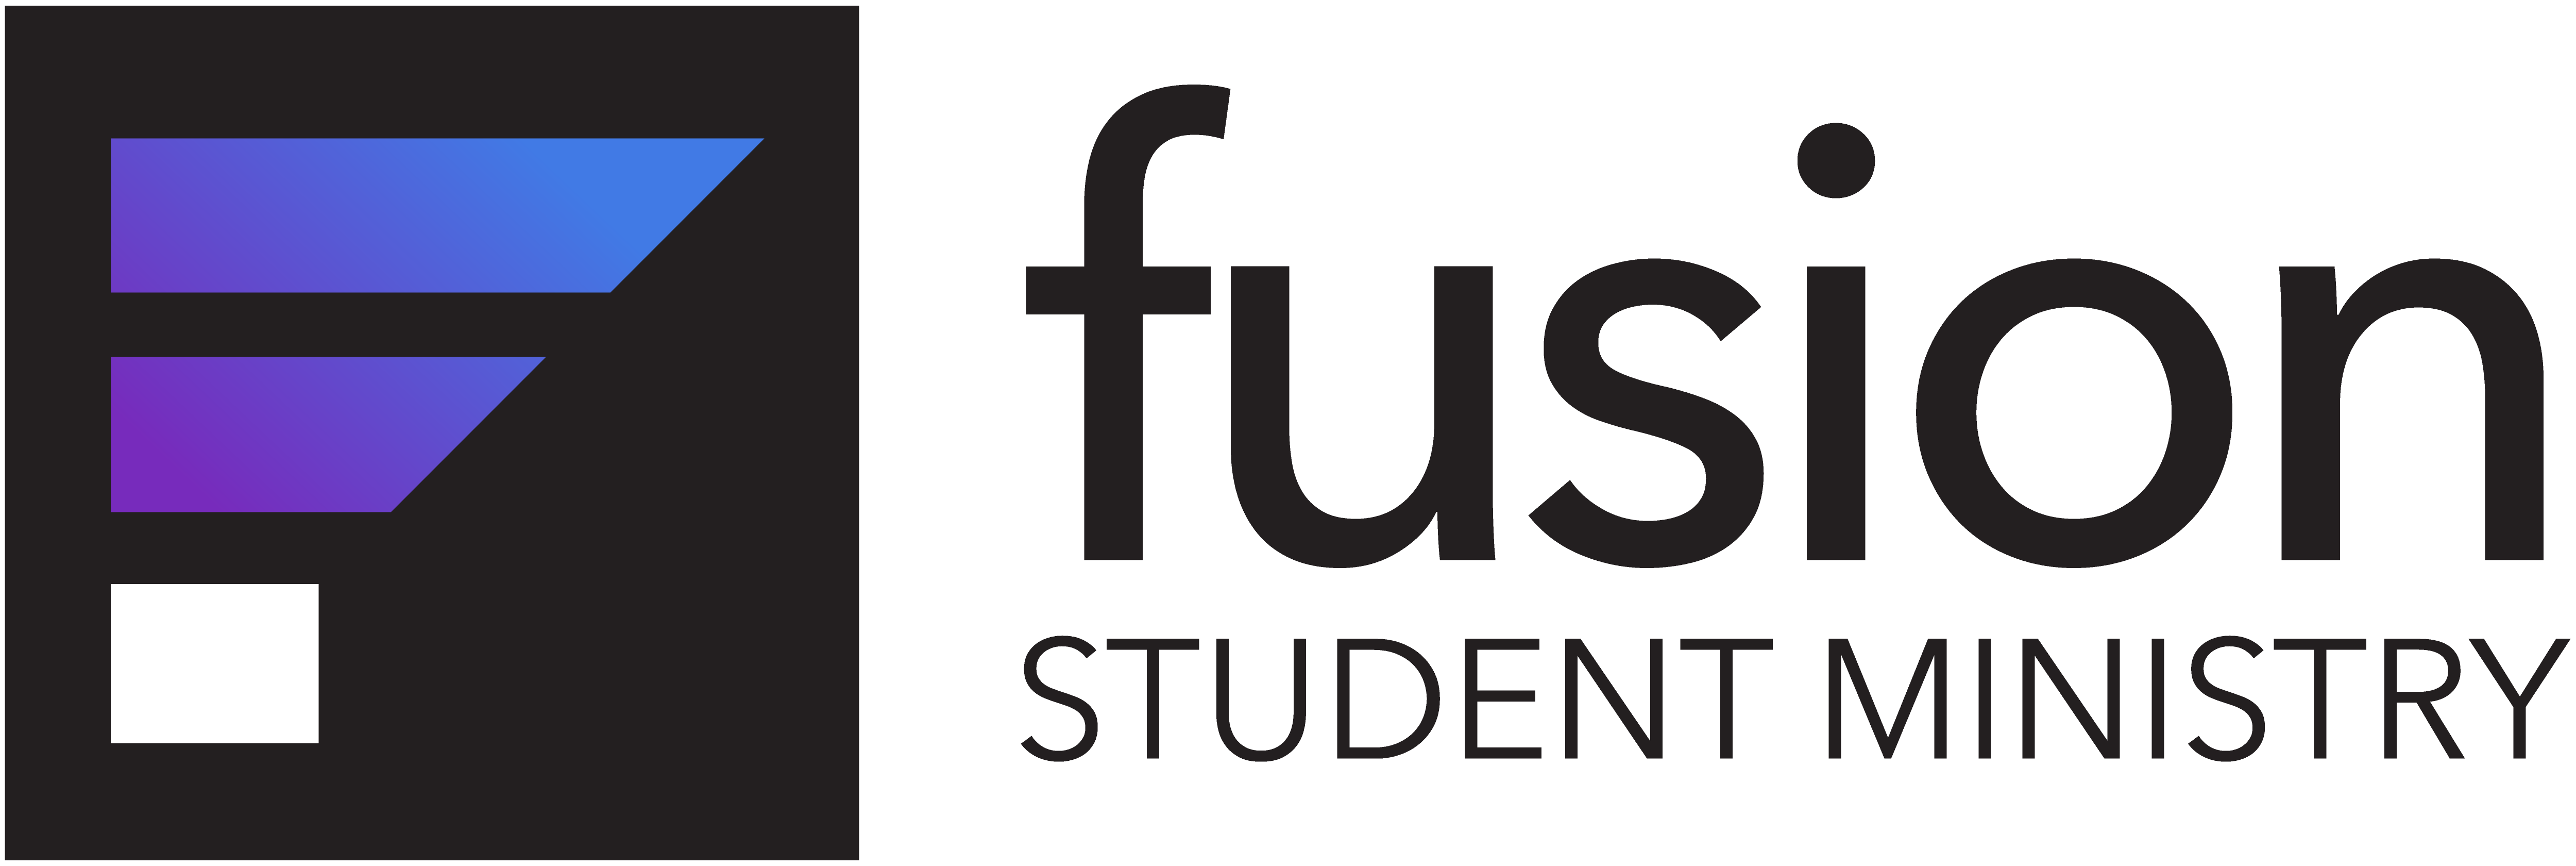 fusion-logo22.png